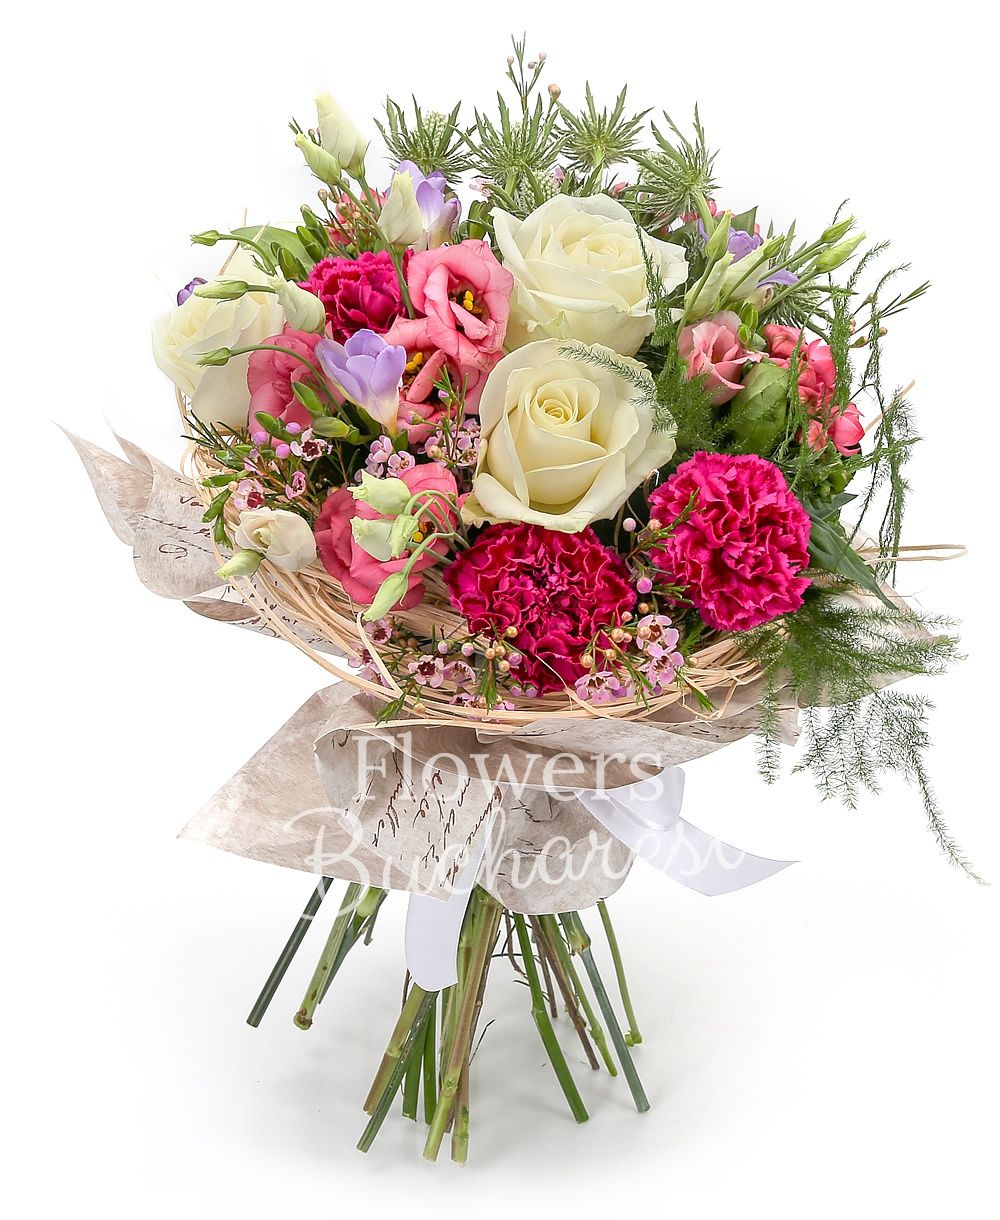 3 white roses, 5 pink lisianthus, 3 white eryngium, 5 purple freesias, 3 cyclam carnations, 3 pink bouvardia, waxflower, greenery